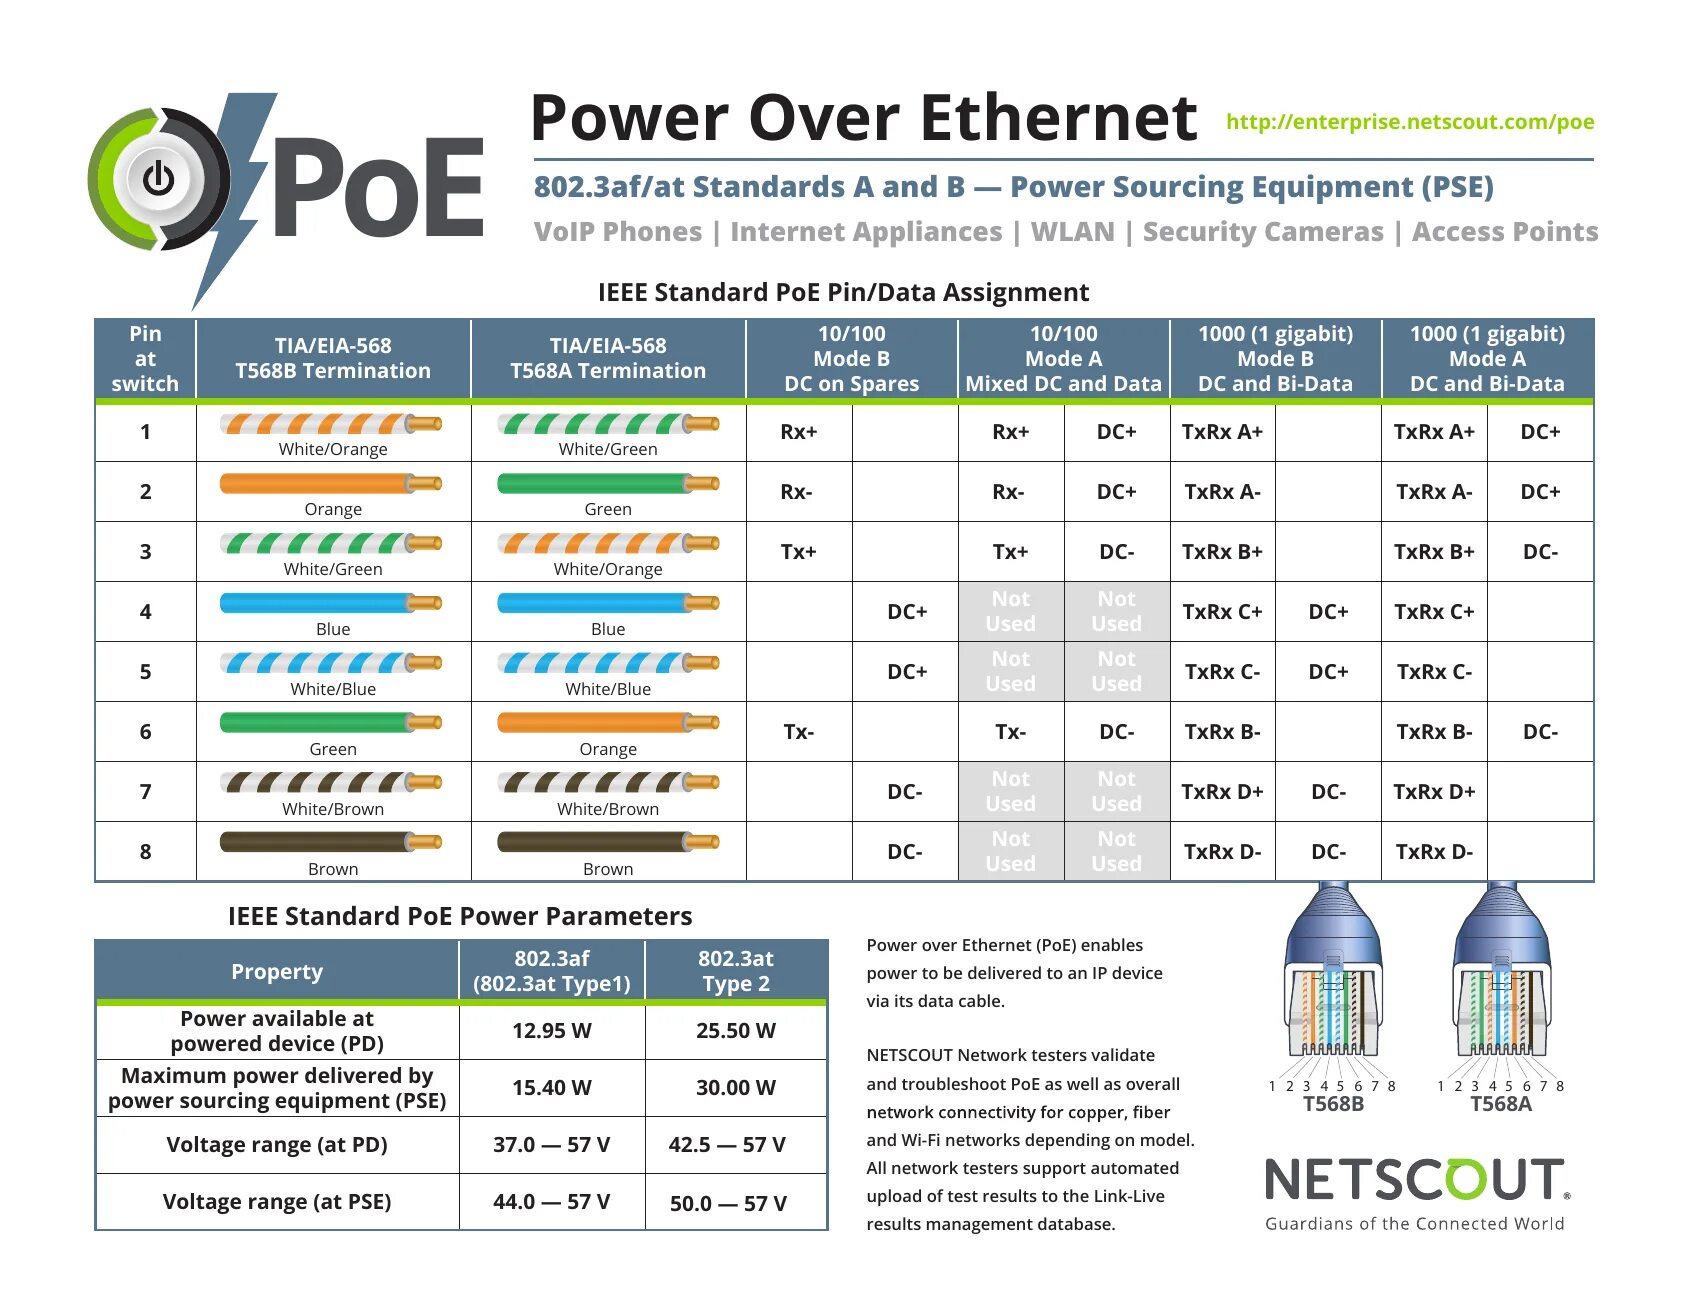 Poe количество. POE 802.3at распиновка. POE стандарты 802.3af/at. Power over Ethernet (POE; стандарт IEEE 802.3af (802.3at Type 1. POE 802.3af распиновка.